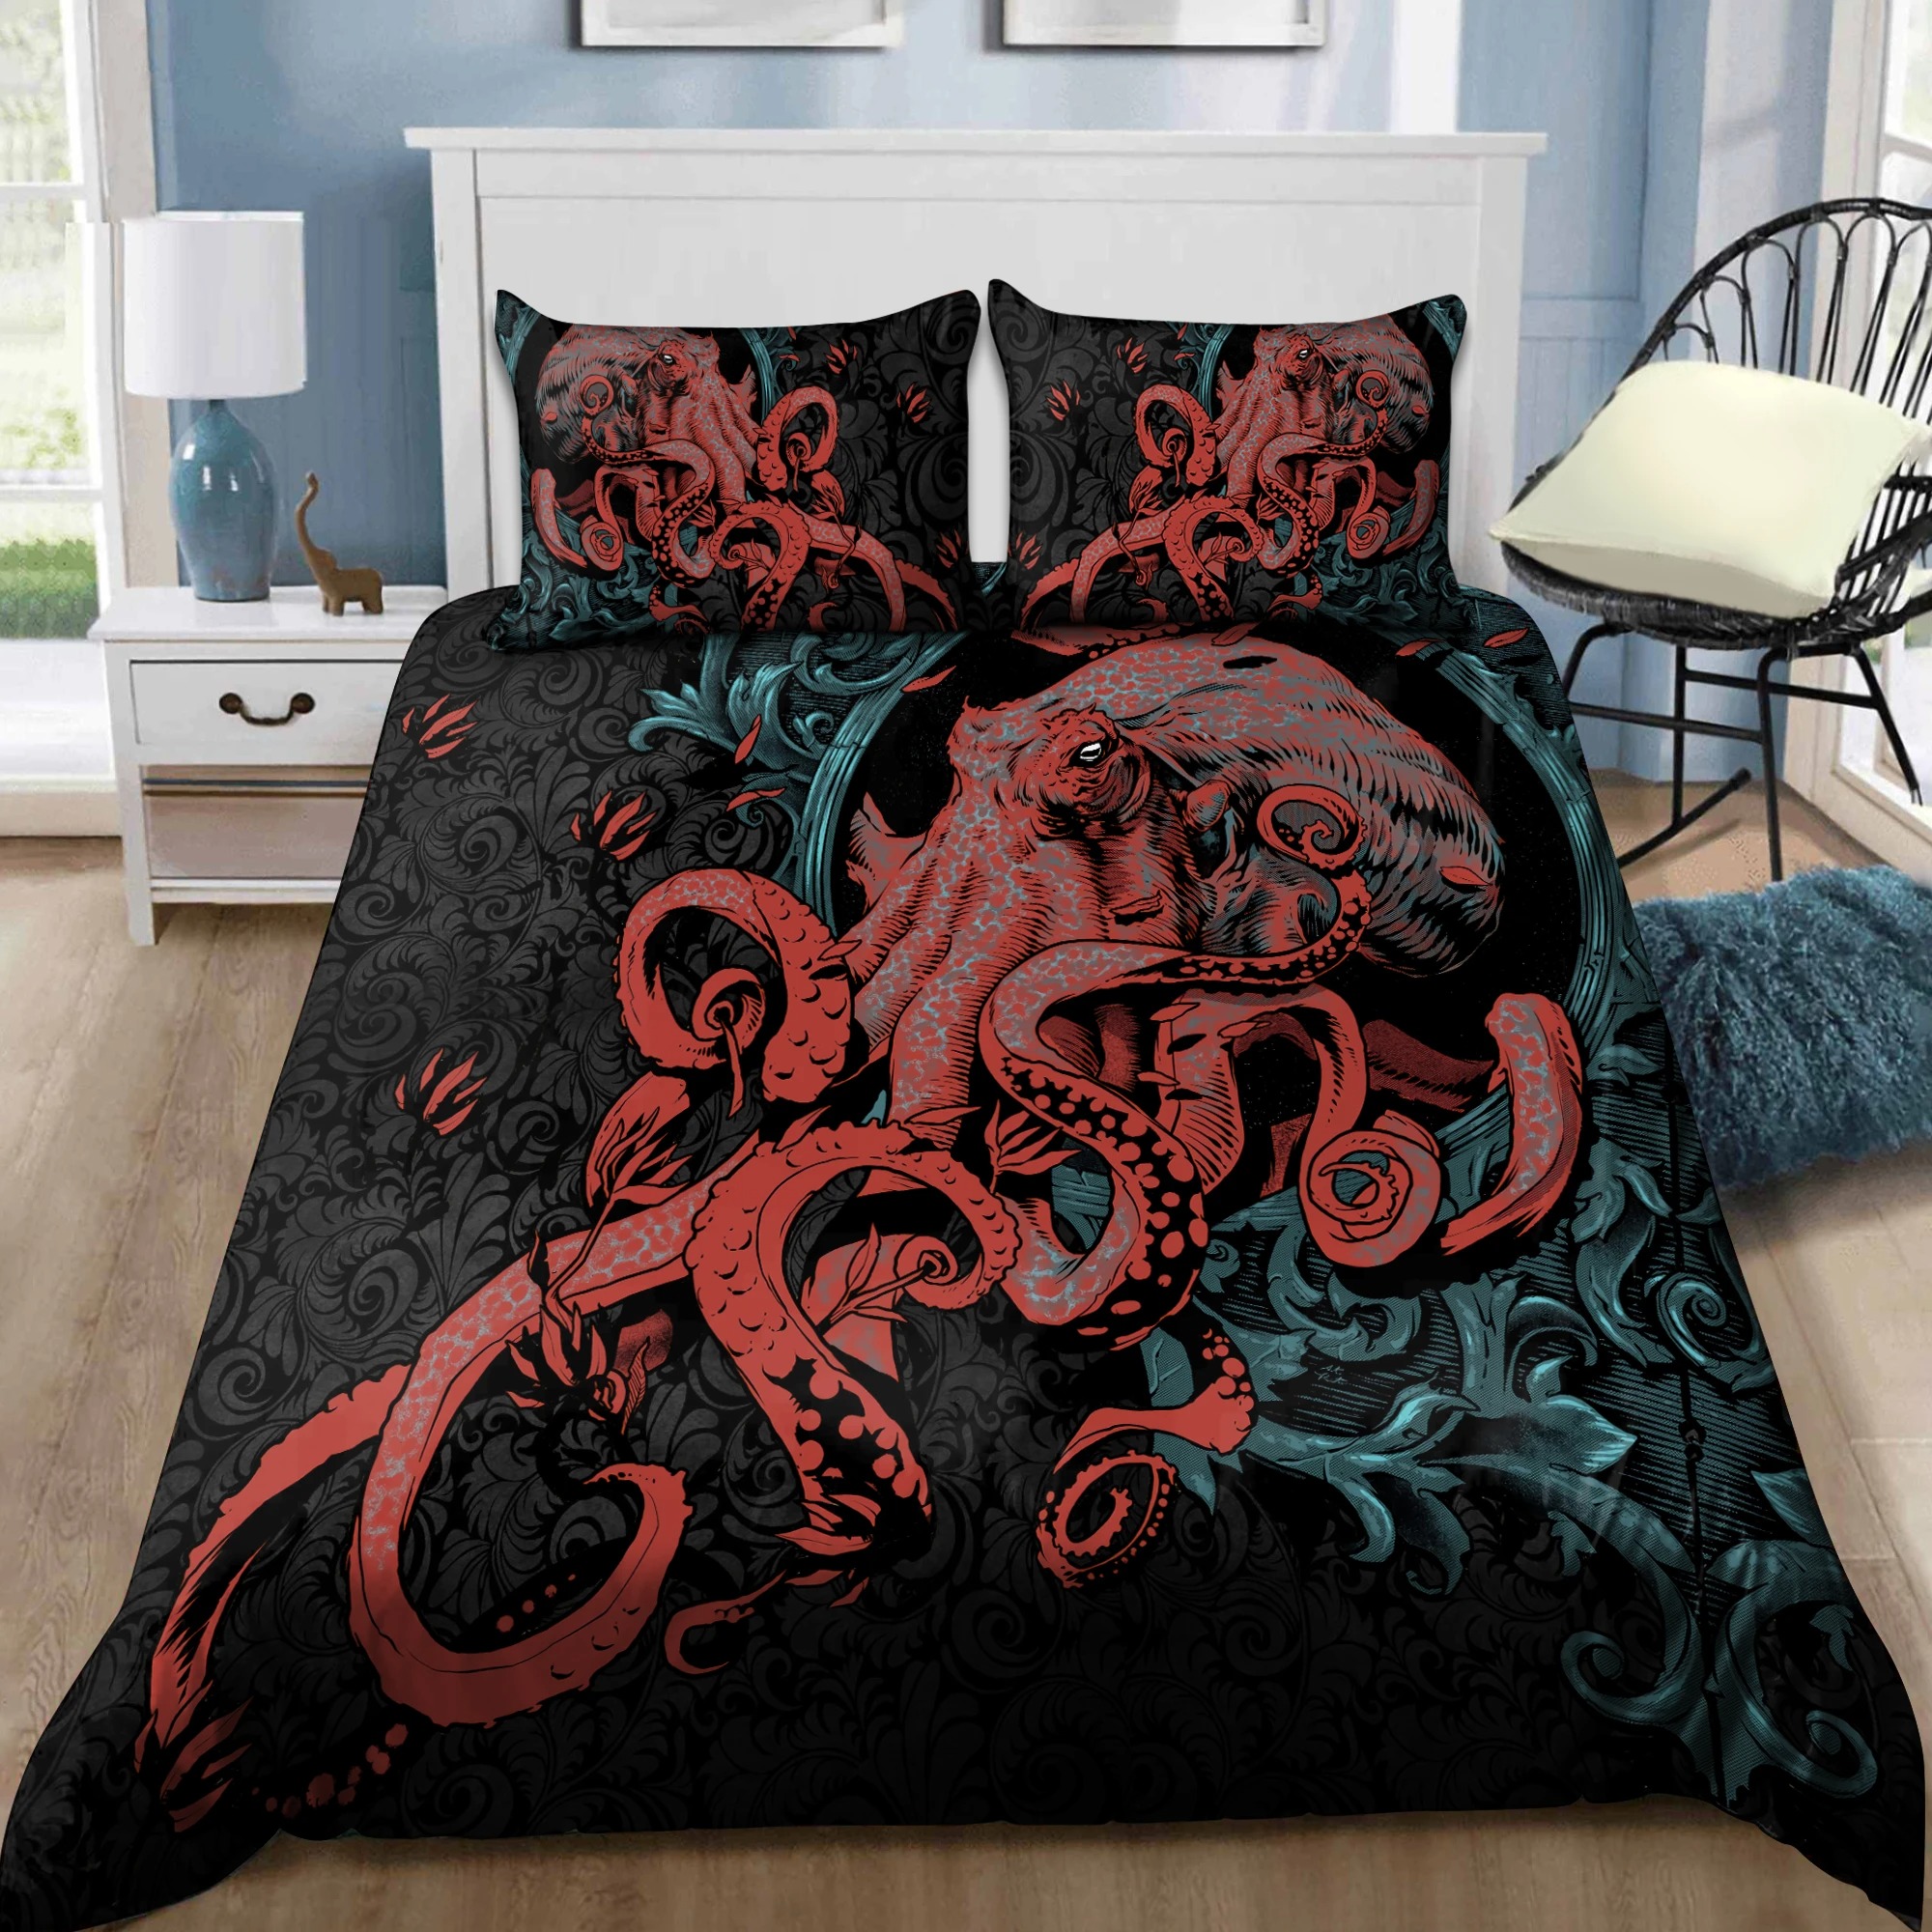 Octopus Gothic bedding set 3